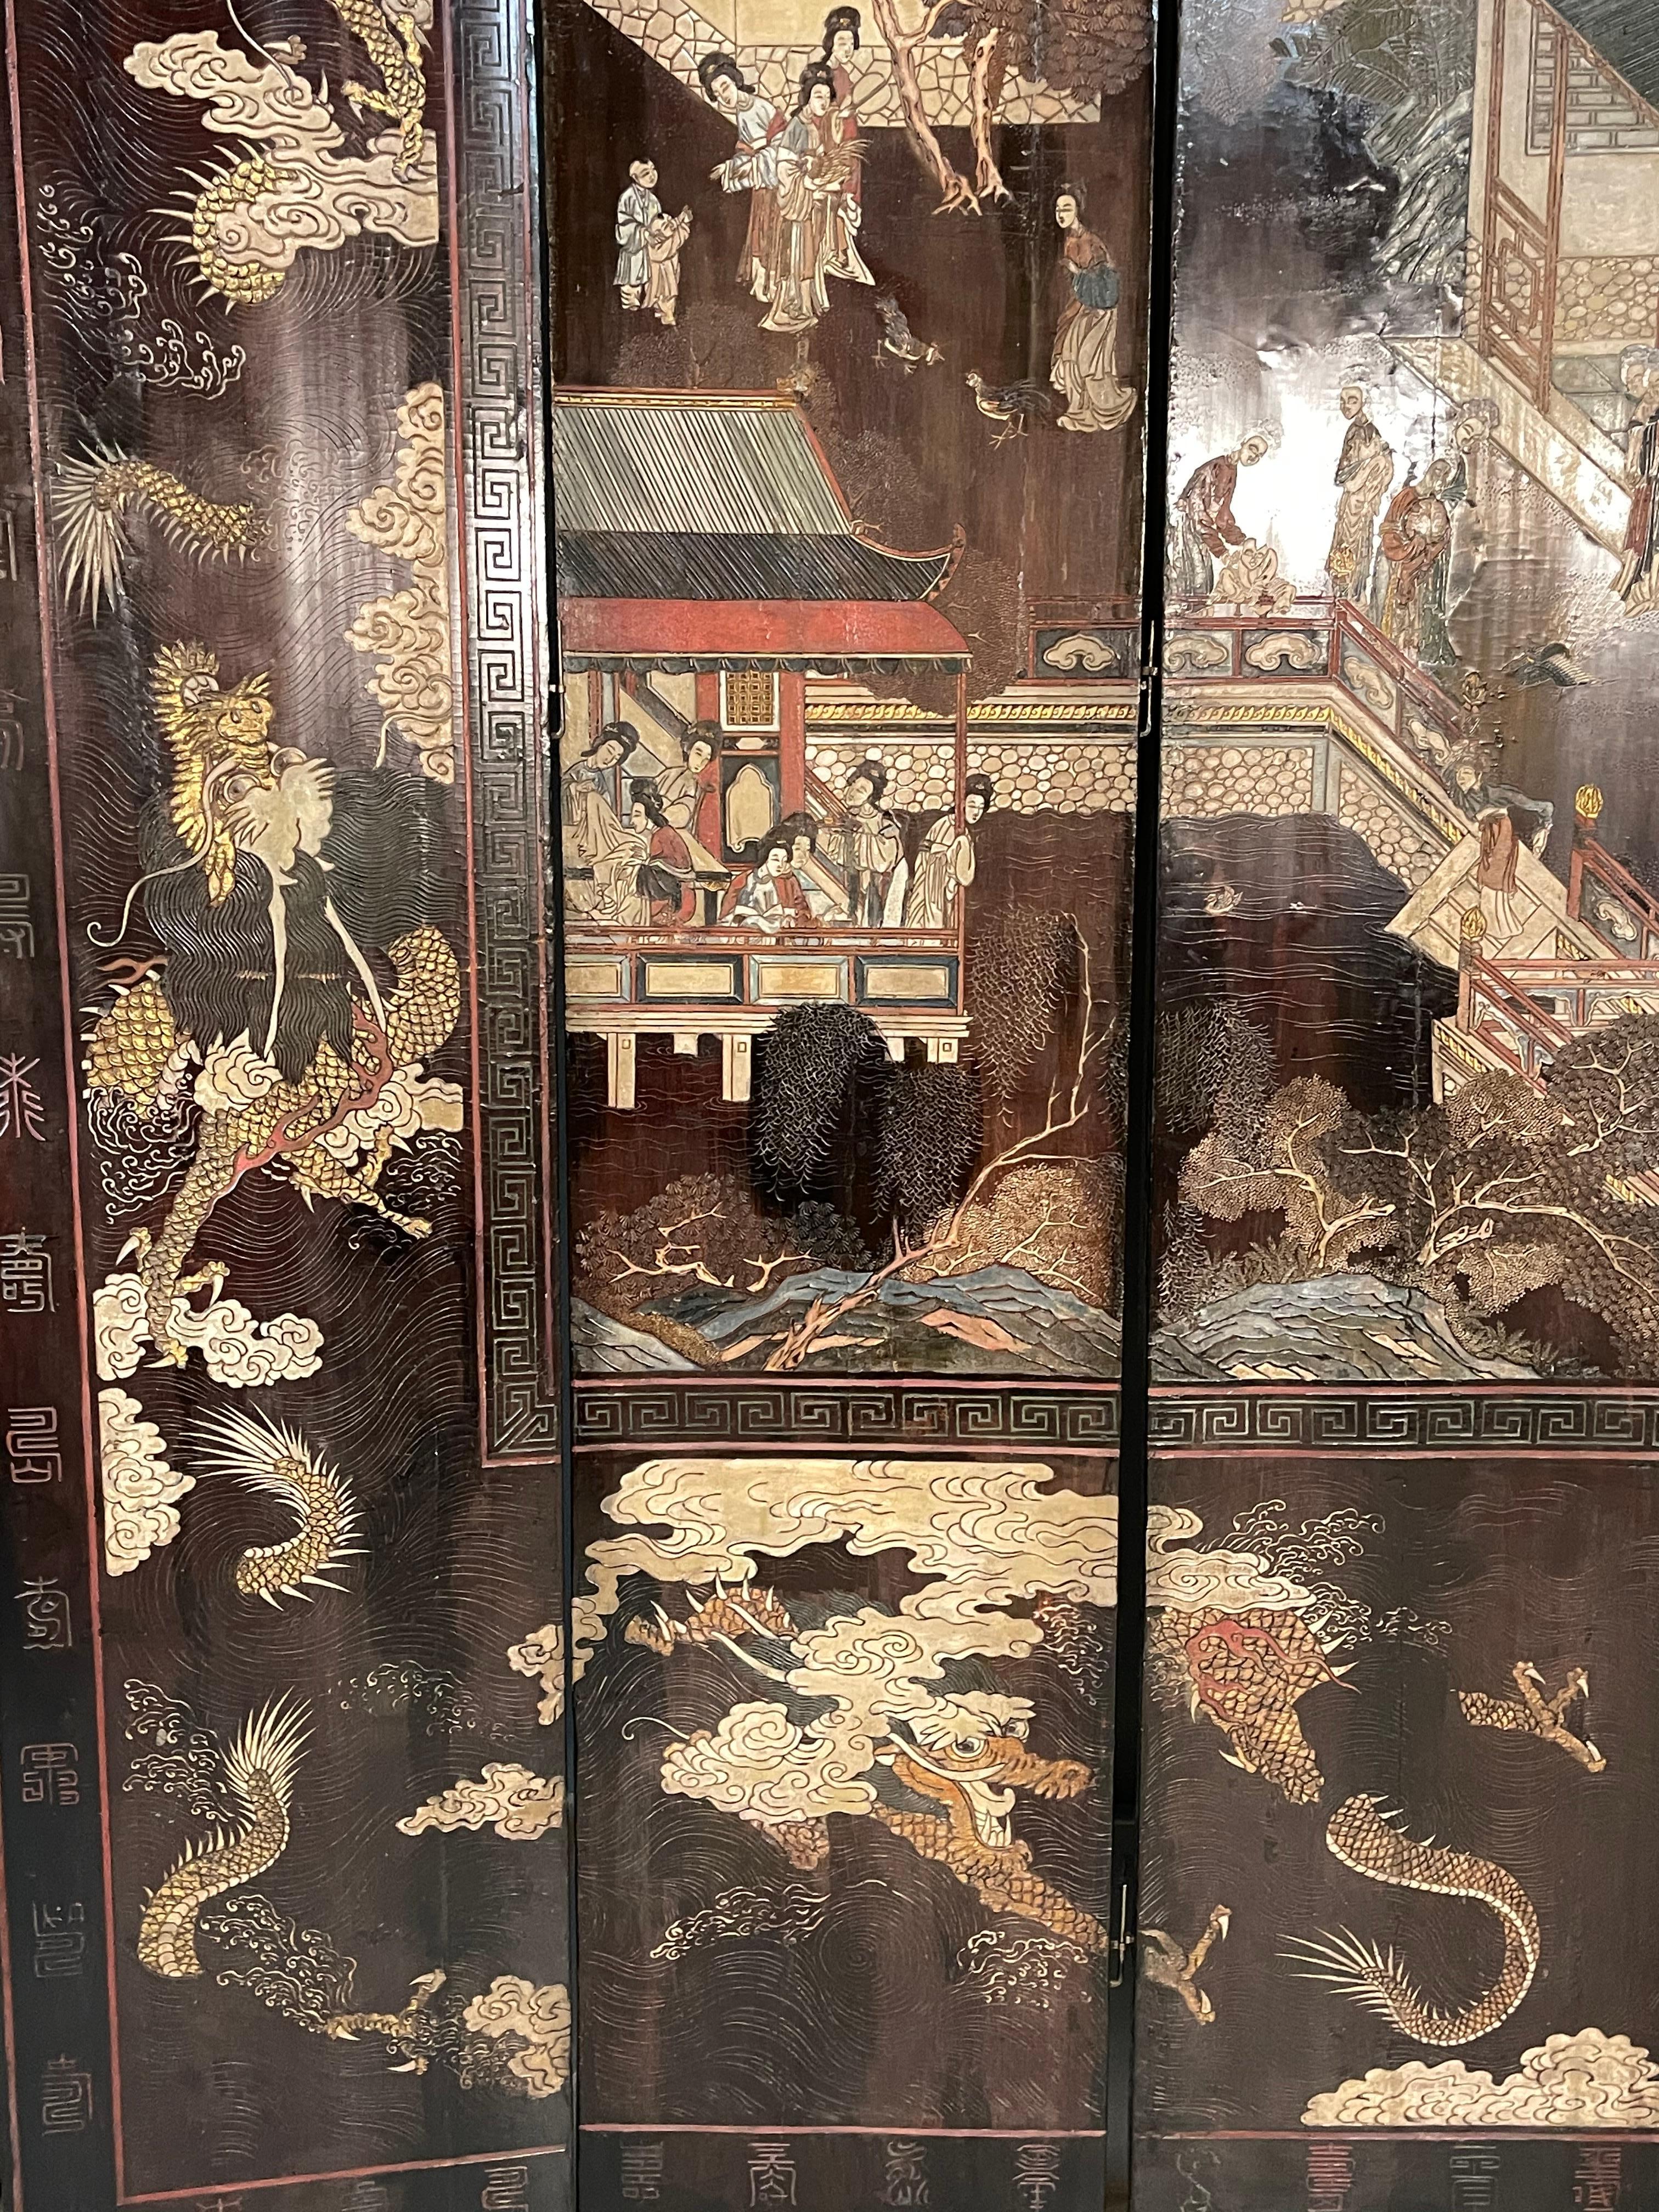 Mid-18th Century Chinese Coromandel Ten Fold Screen / Room Divider 4